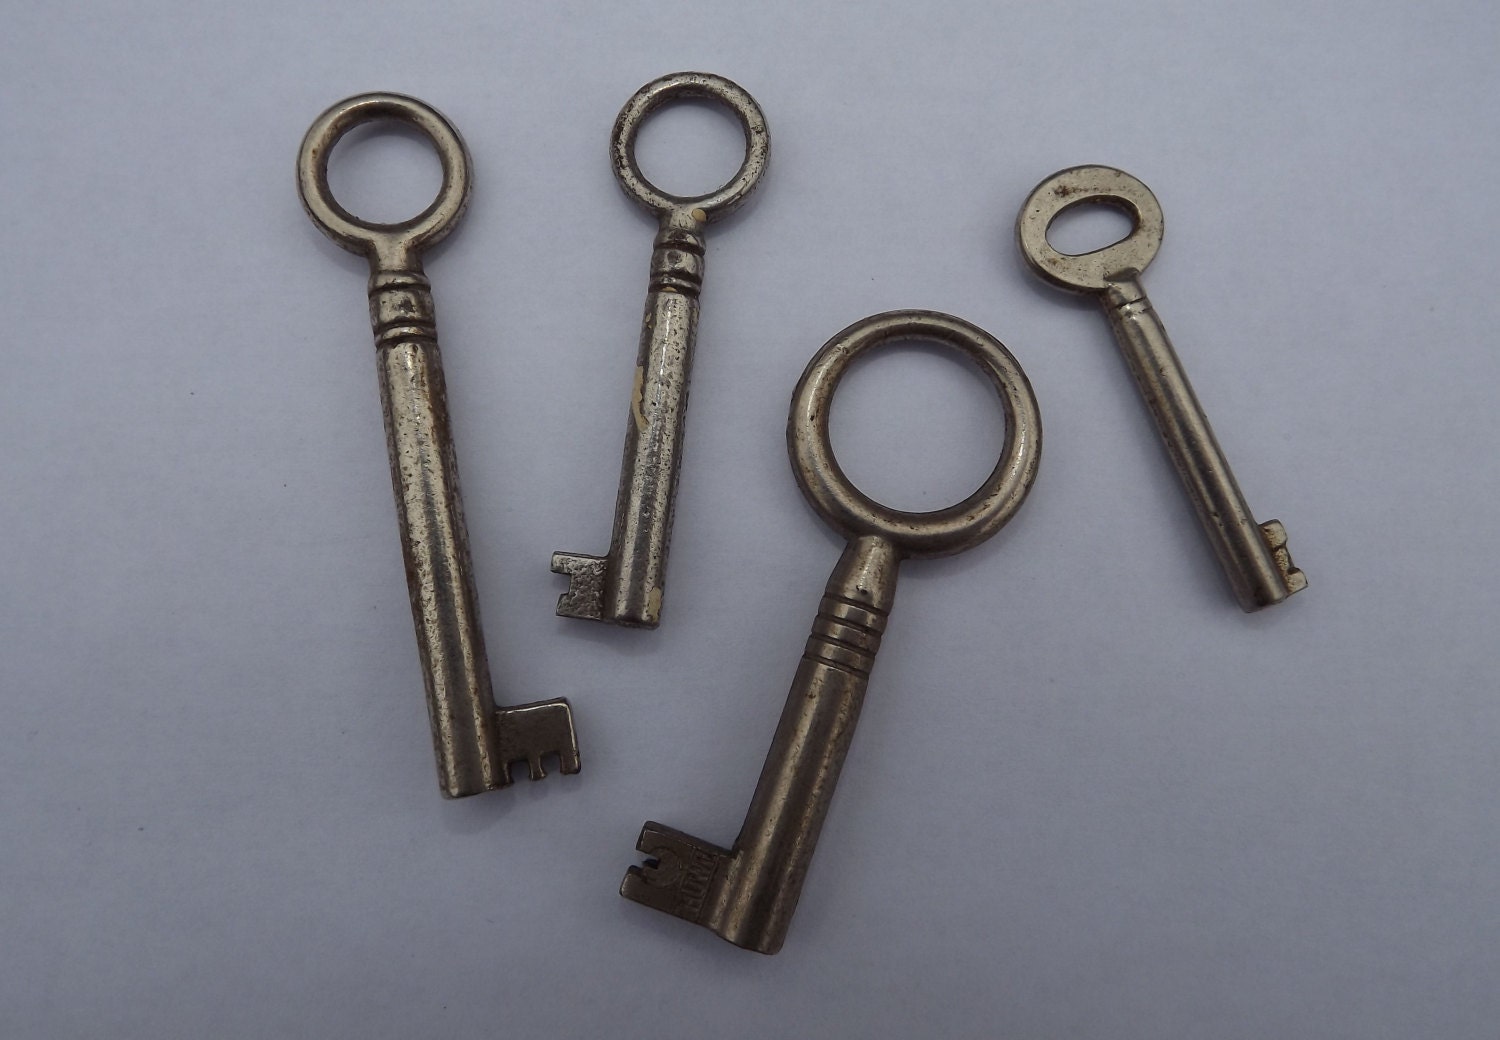 Vintage Keys, Steampunk, Shiny Keys, Home Decor, Key Ring, Steampunk Supplies, Jewellery Project, Old Keys, Small, 4 Keys, ref 17.3a